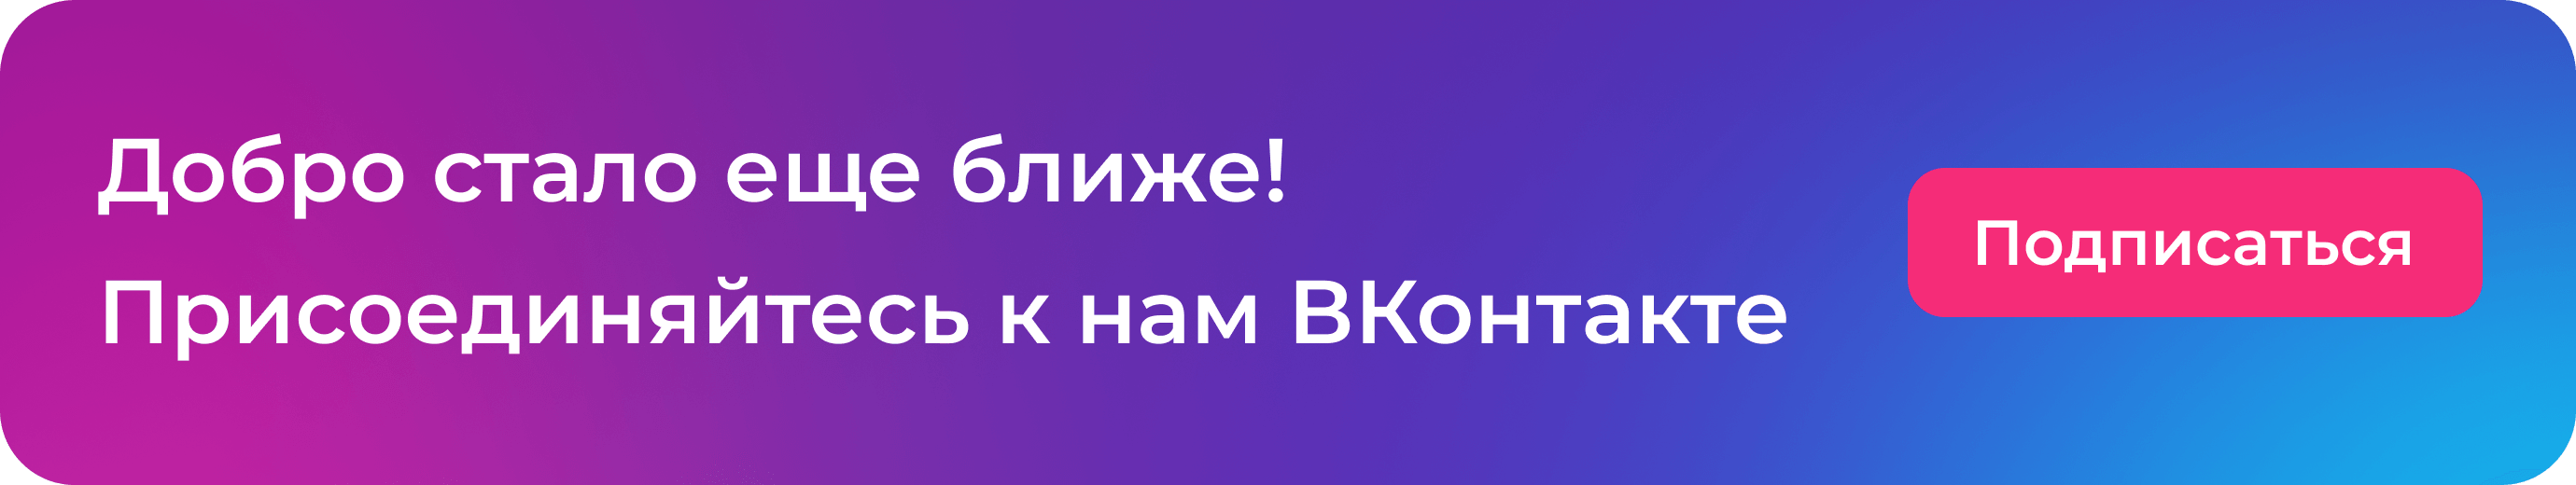 Мы Вконтакте